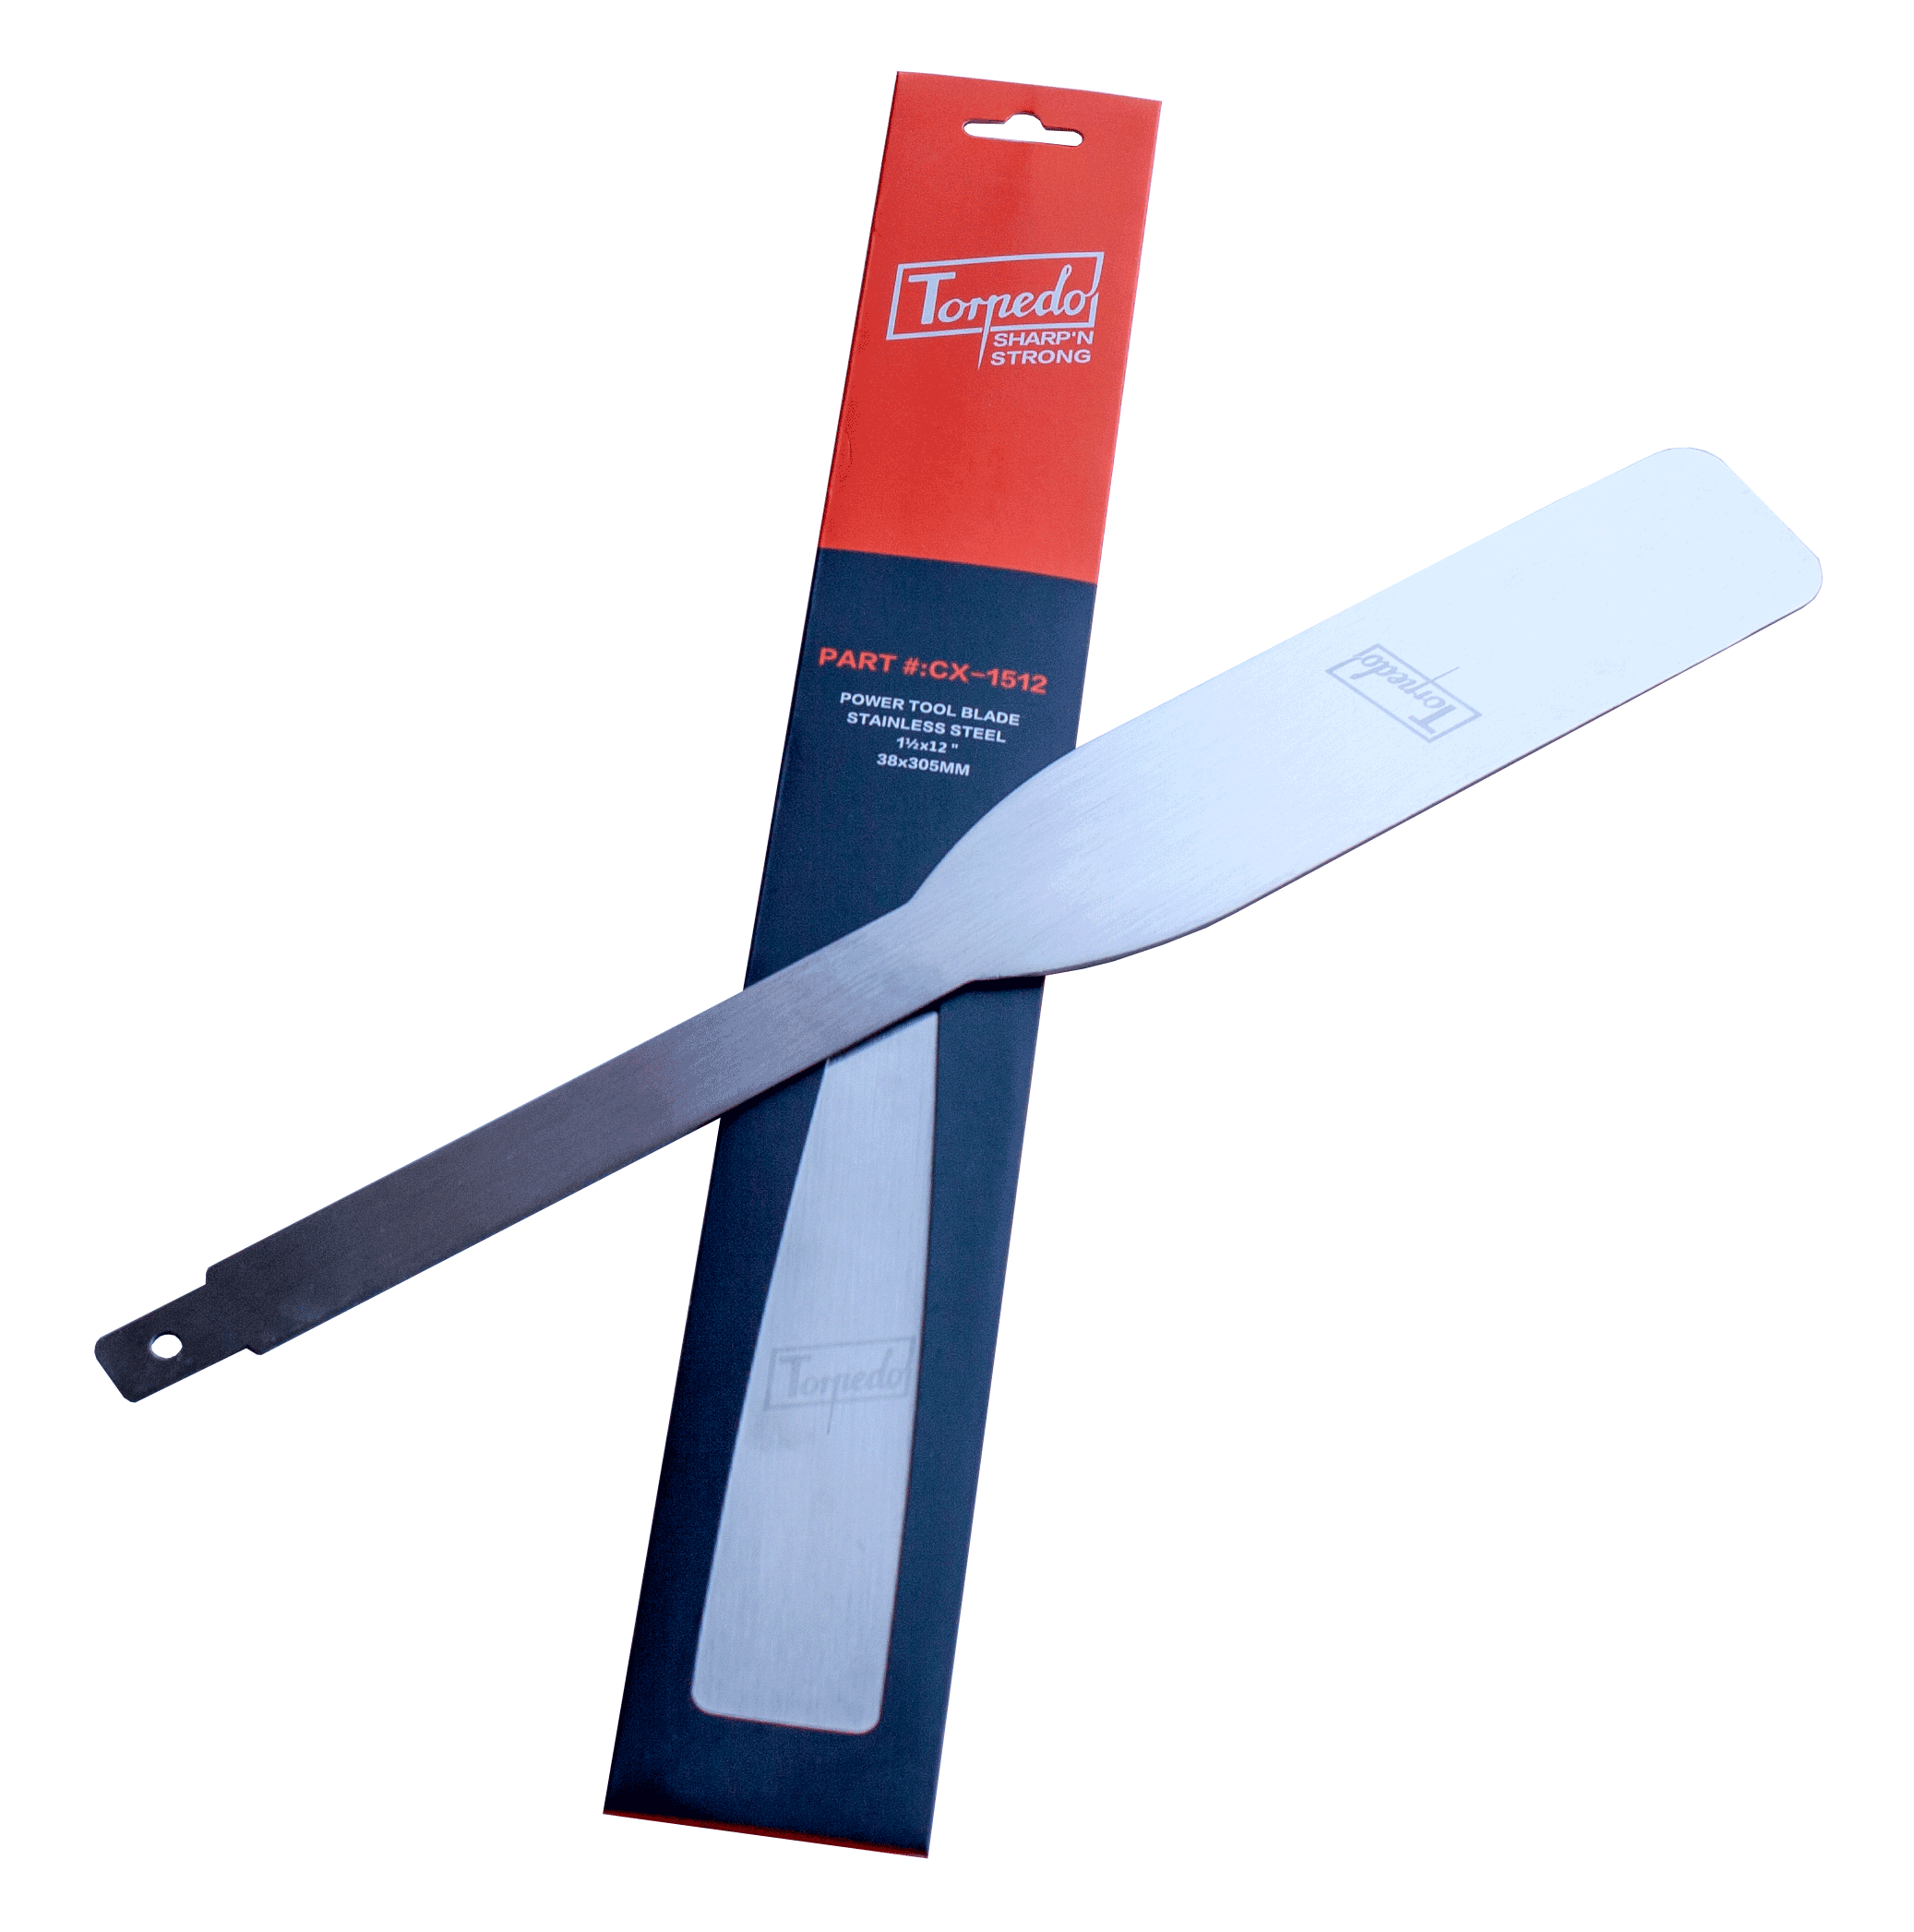 TORPEDO Windshield Express Removal Blade Autoglass Tool, 1.5 X 12 inch - JAAGS